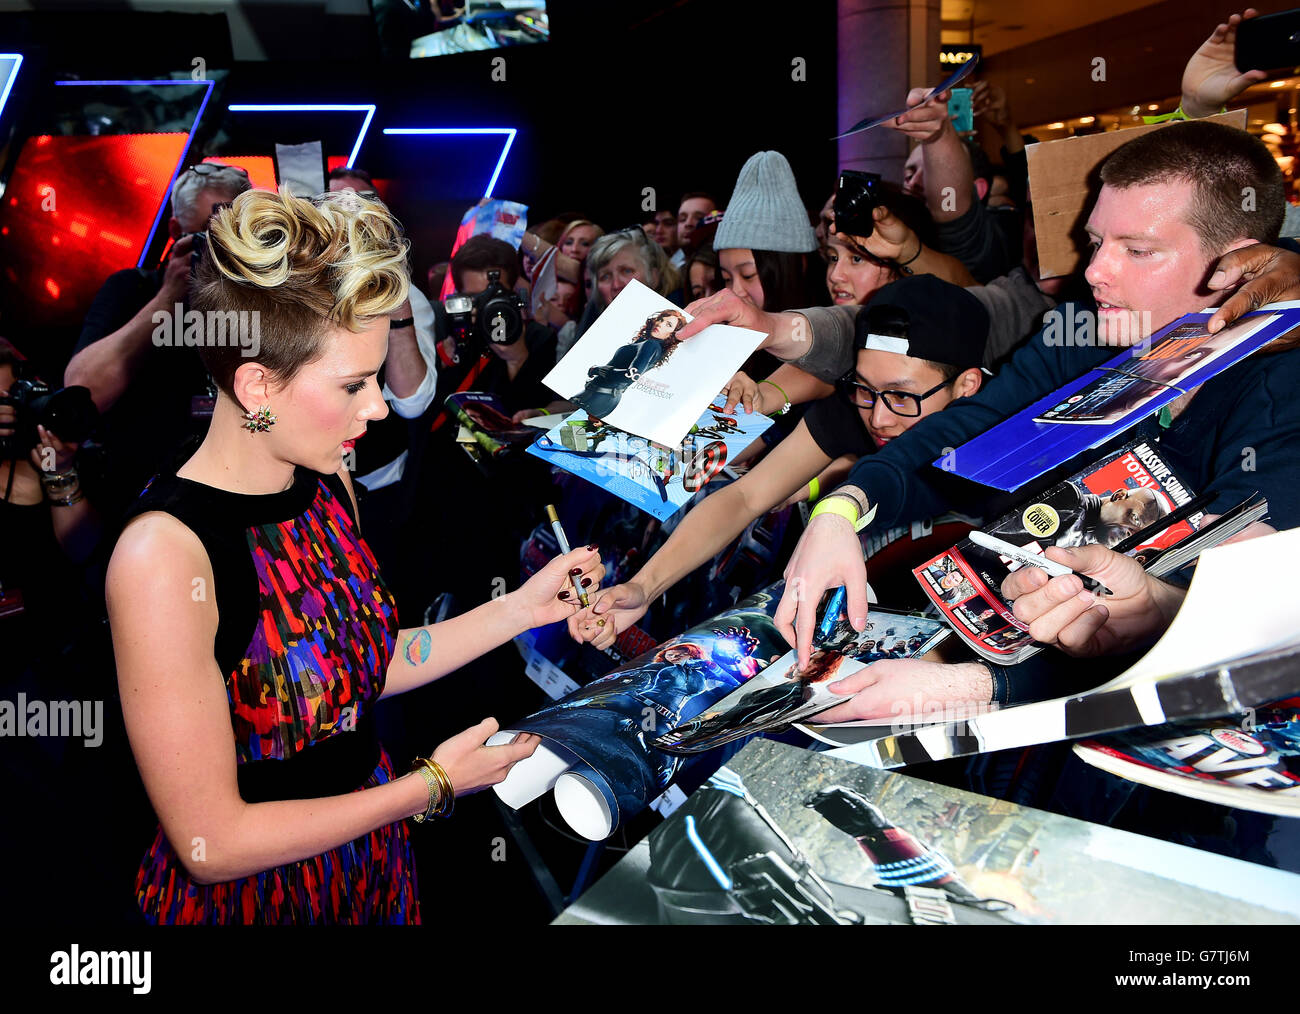 Scarlett Johansson (Natasha Romanoff/ Black Widow) attending Marvel Avengers: The Age Of Ultron European Film Premiere held at the VUE cinema in Westfield, London. Stock Photo